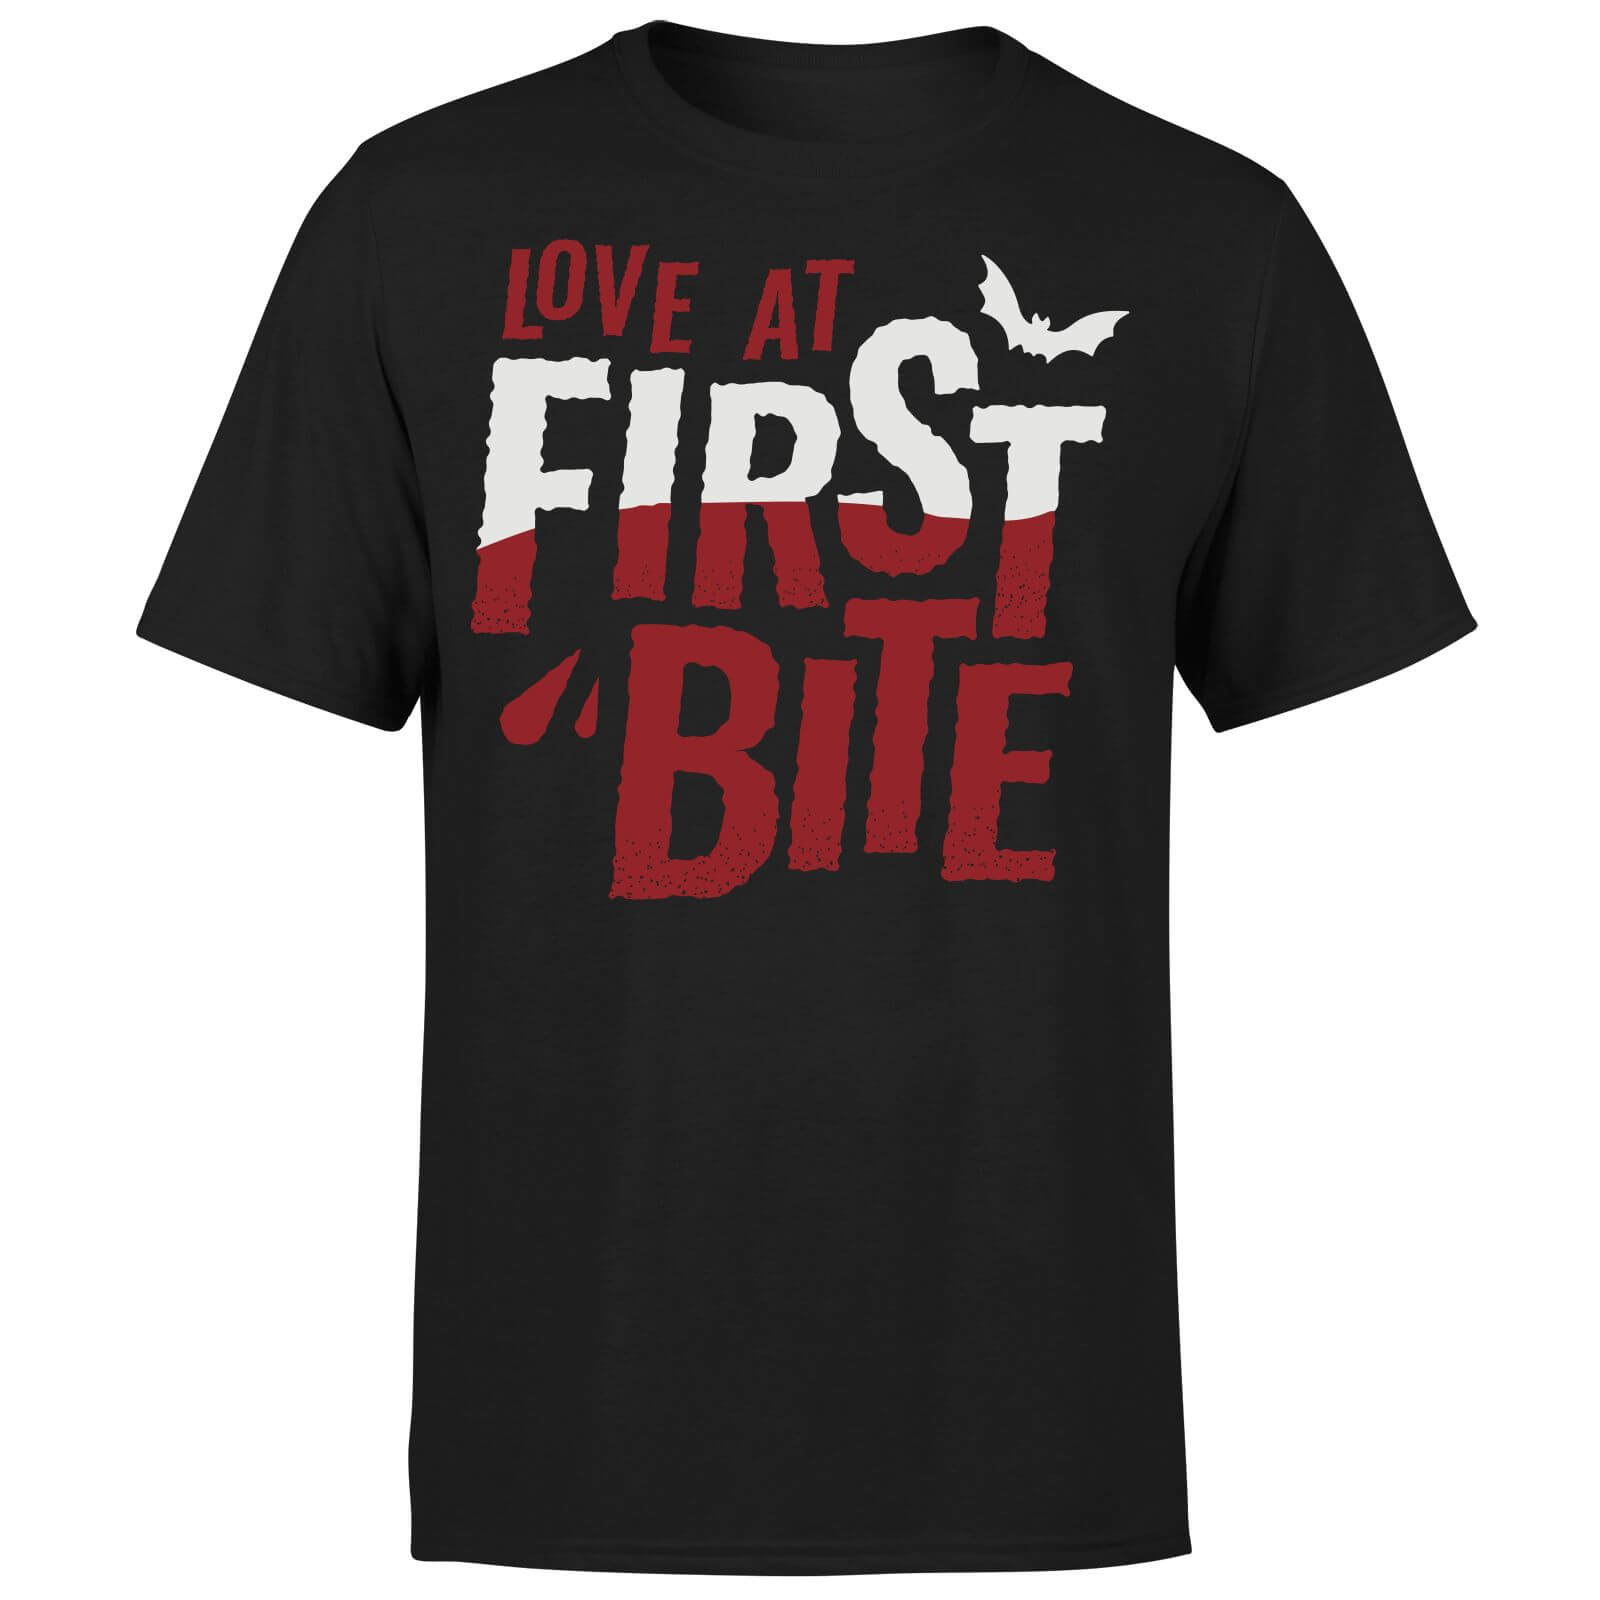 Love at First Bite T-Shirt - Black - S - Black